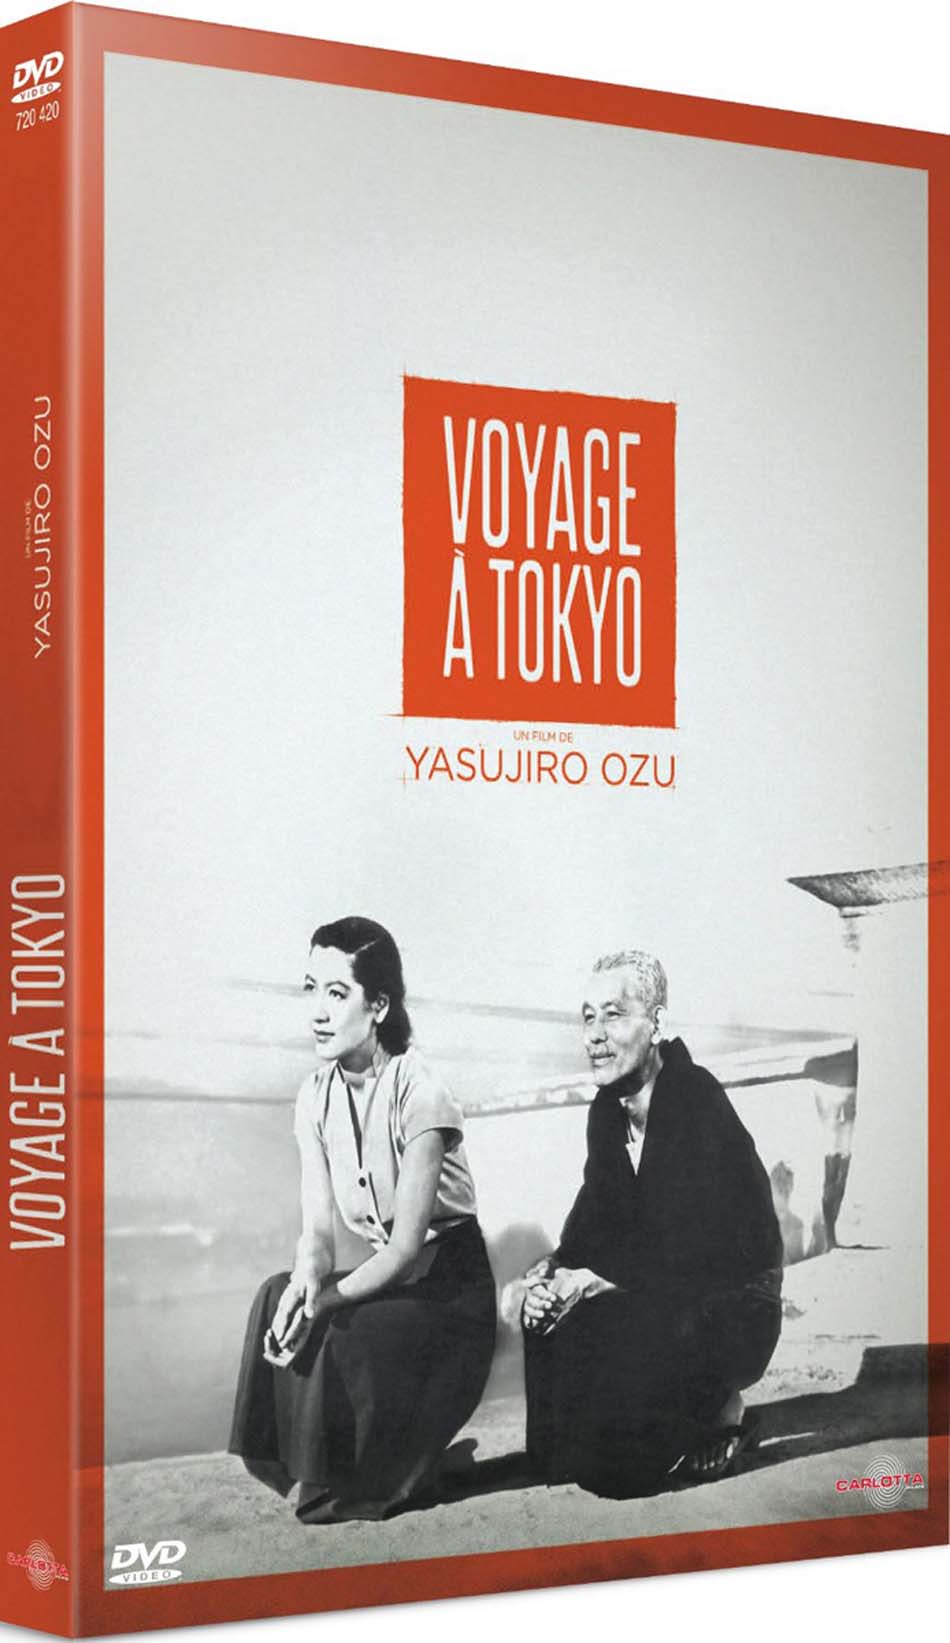 the voyage a tokyo